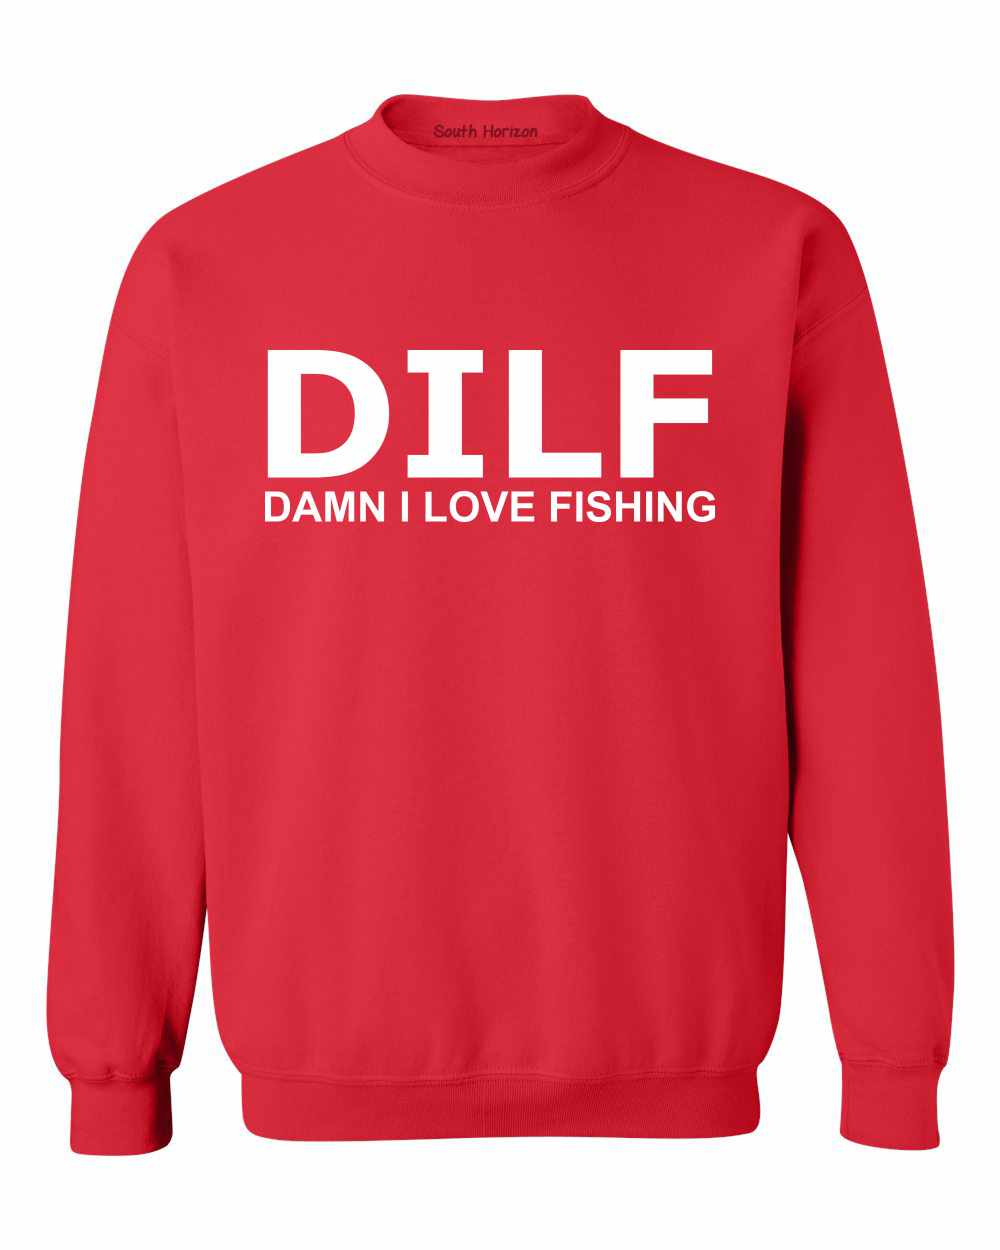 DILF Damn I Love Fishing on SweatShirt